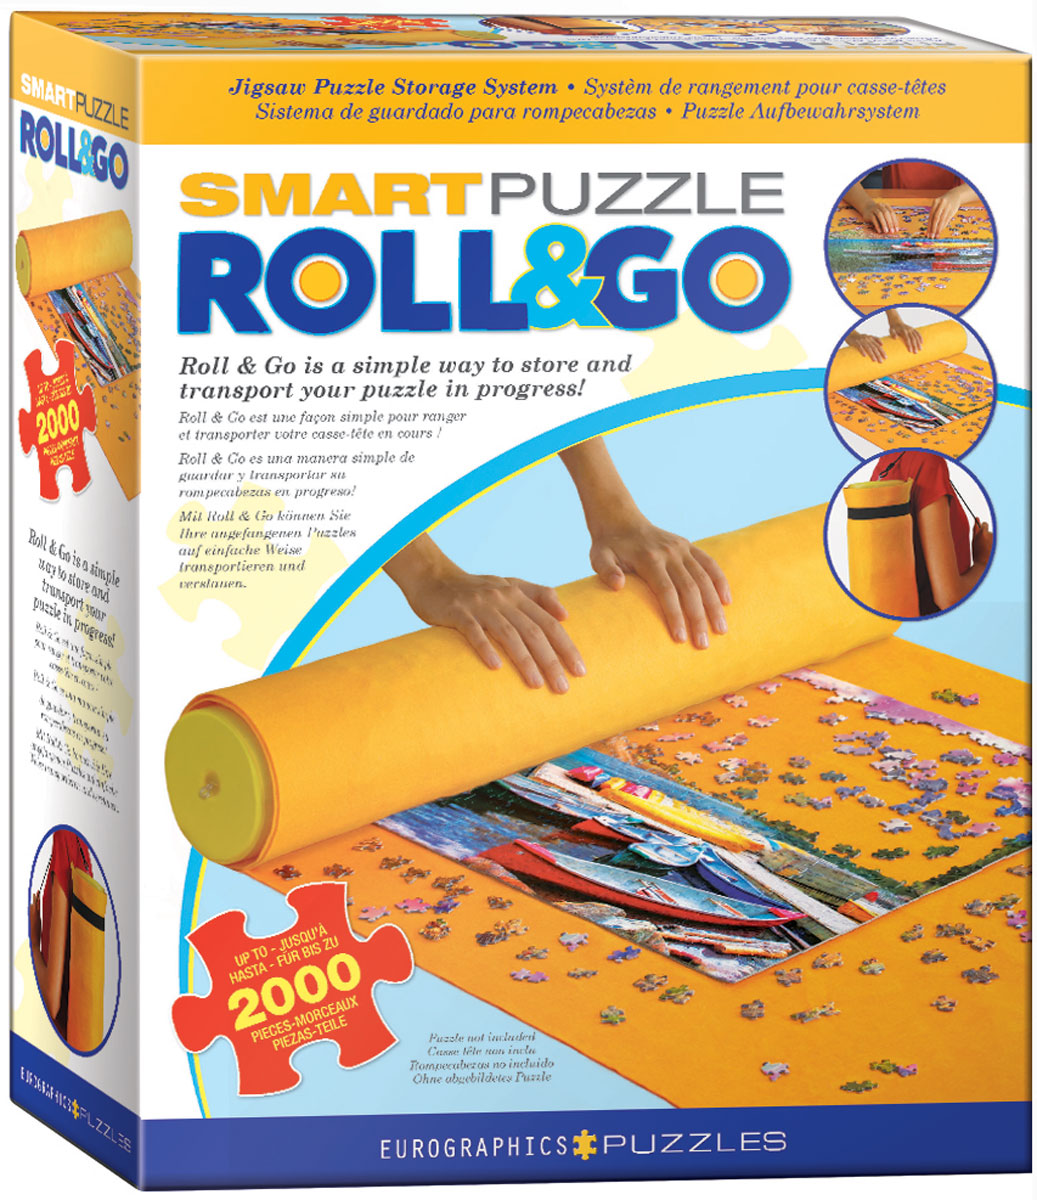 Smart Puzzle Roll & Go Mat | Impulse Games and Hobbies